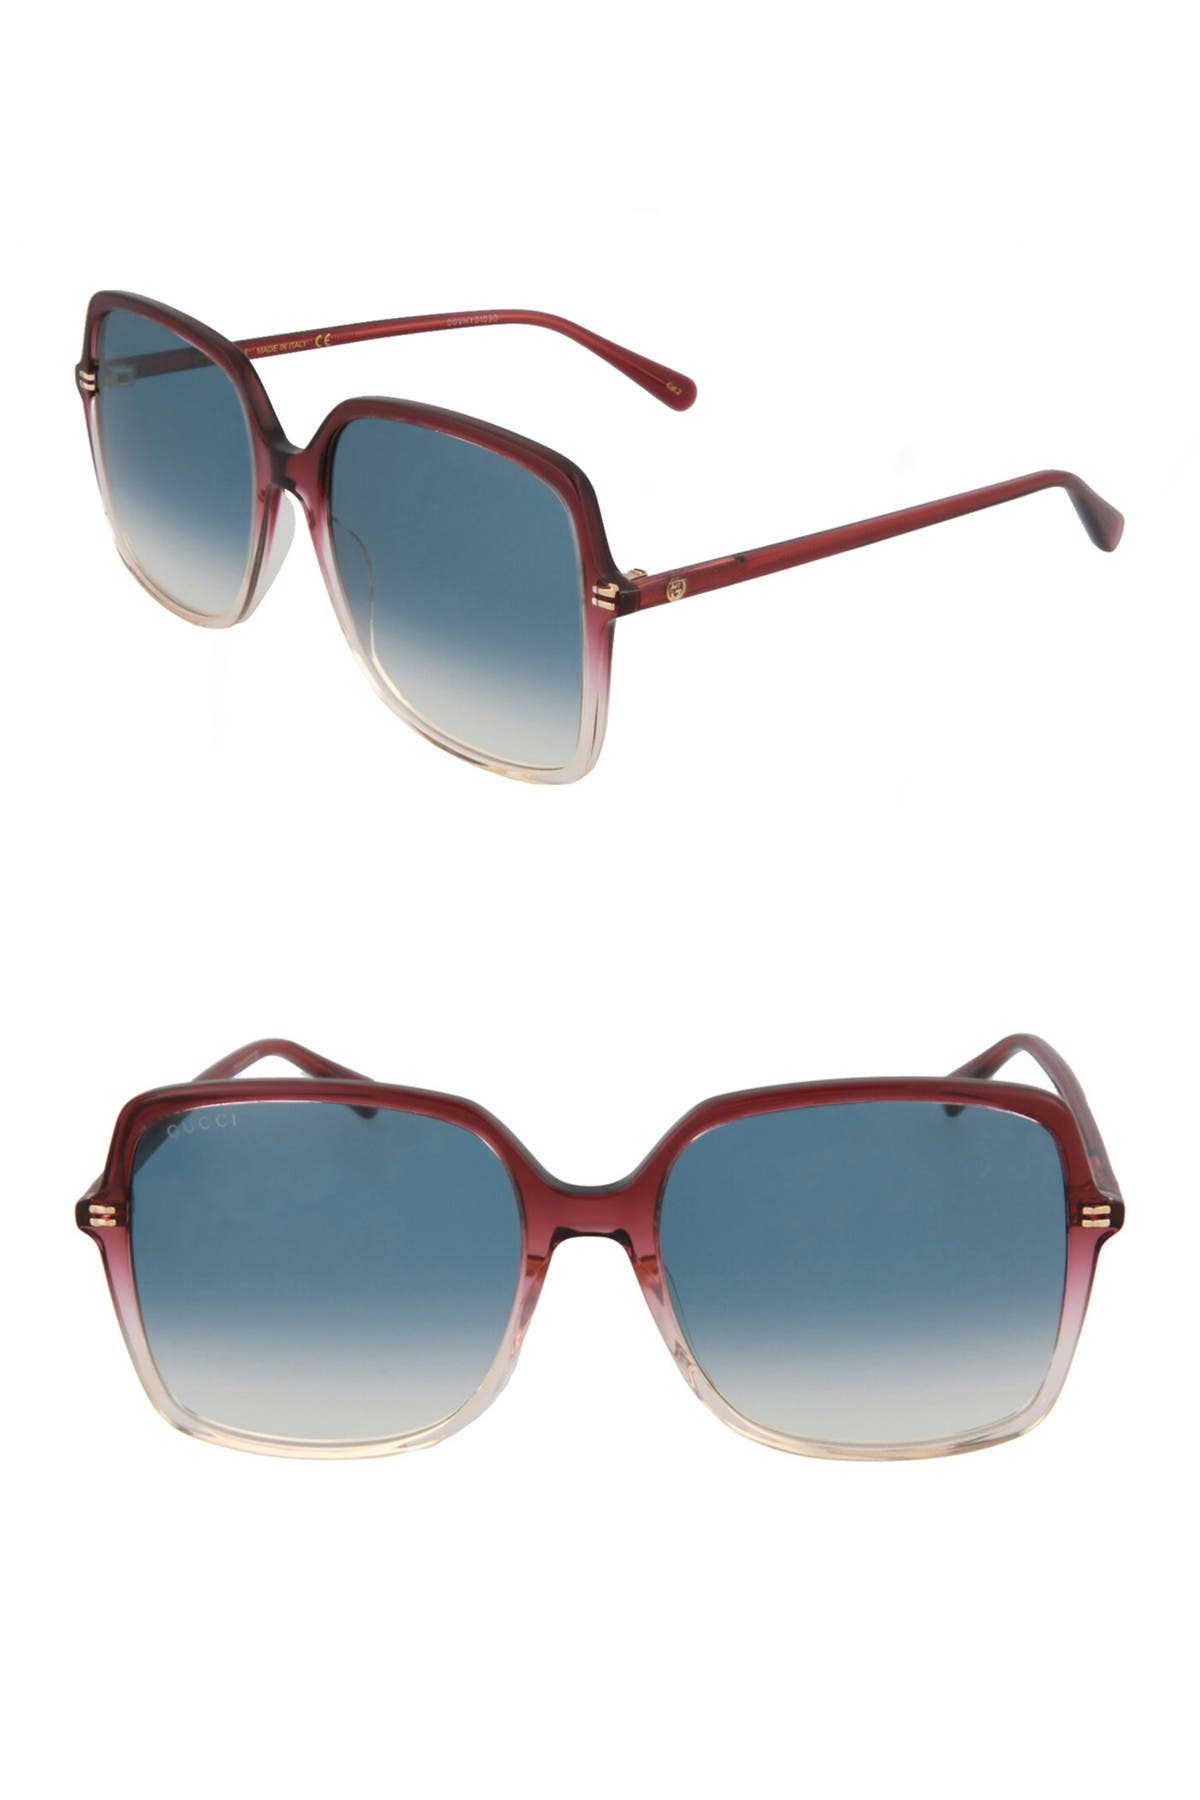 Gucci 57mm Core Square Sunglasses In Red Burgundy Blue